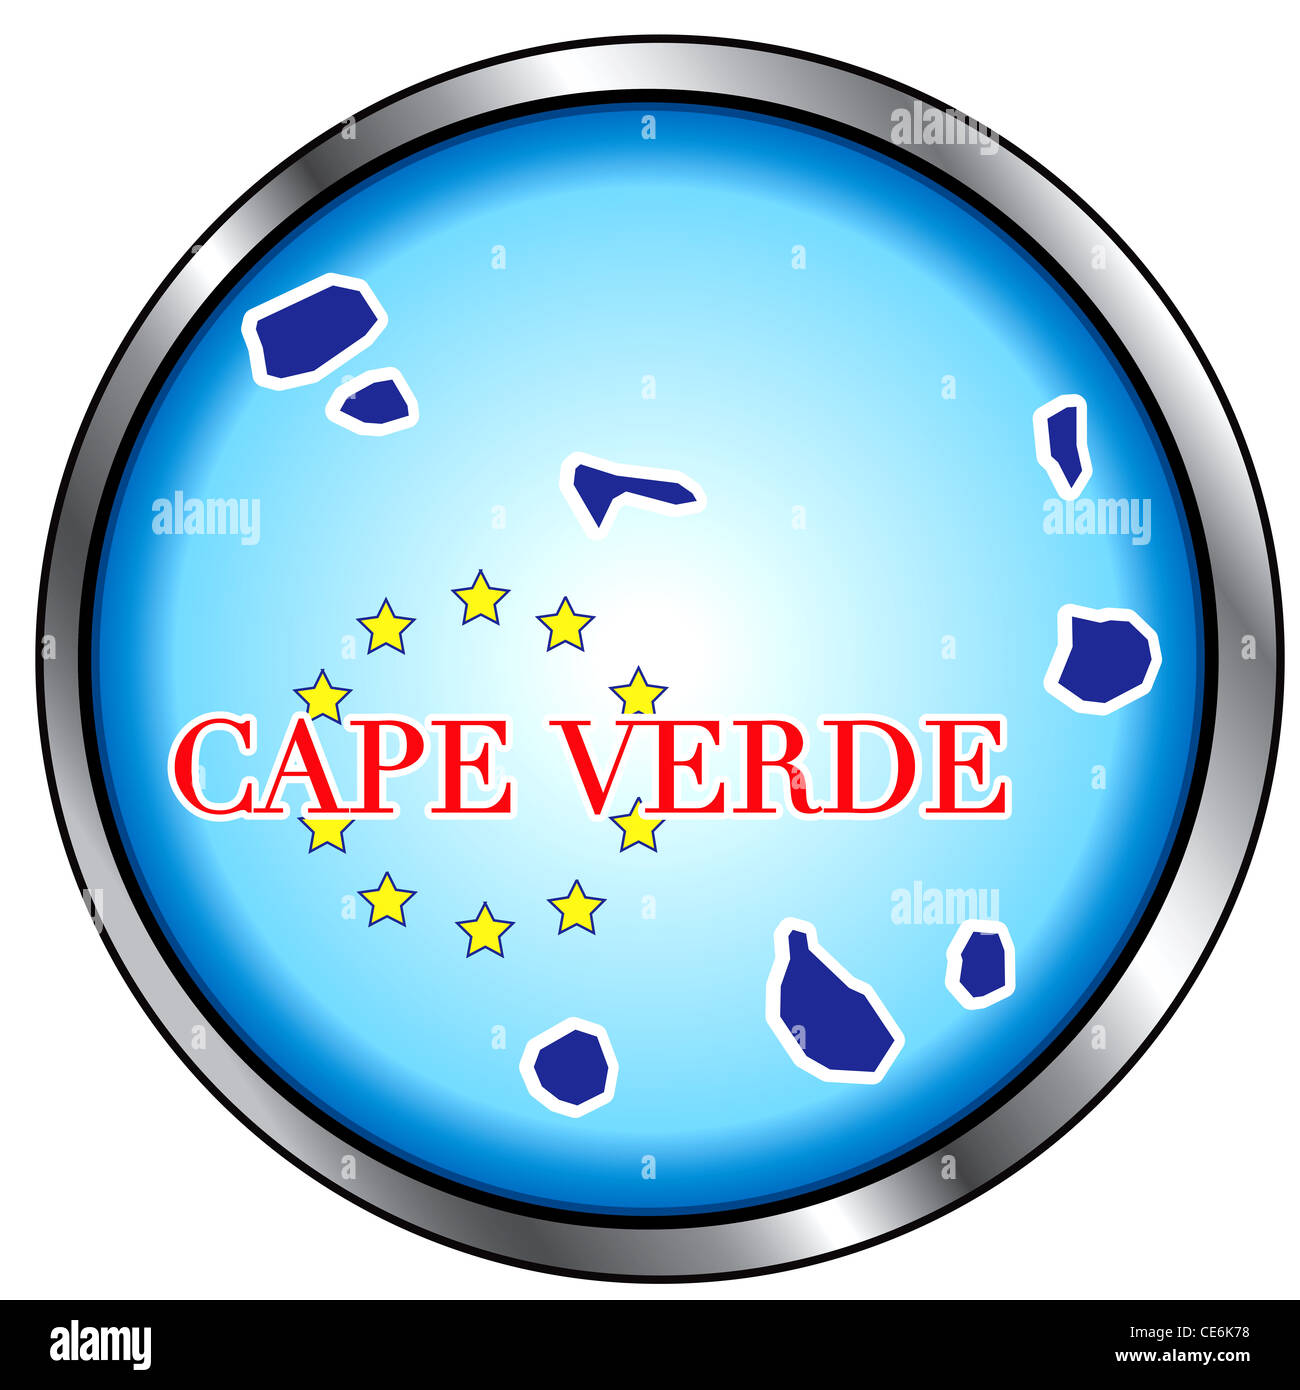 Vector Illustration for Cape Verde, Round Button. Stock Photo